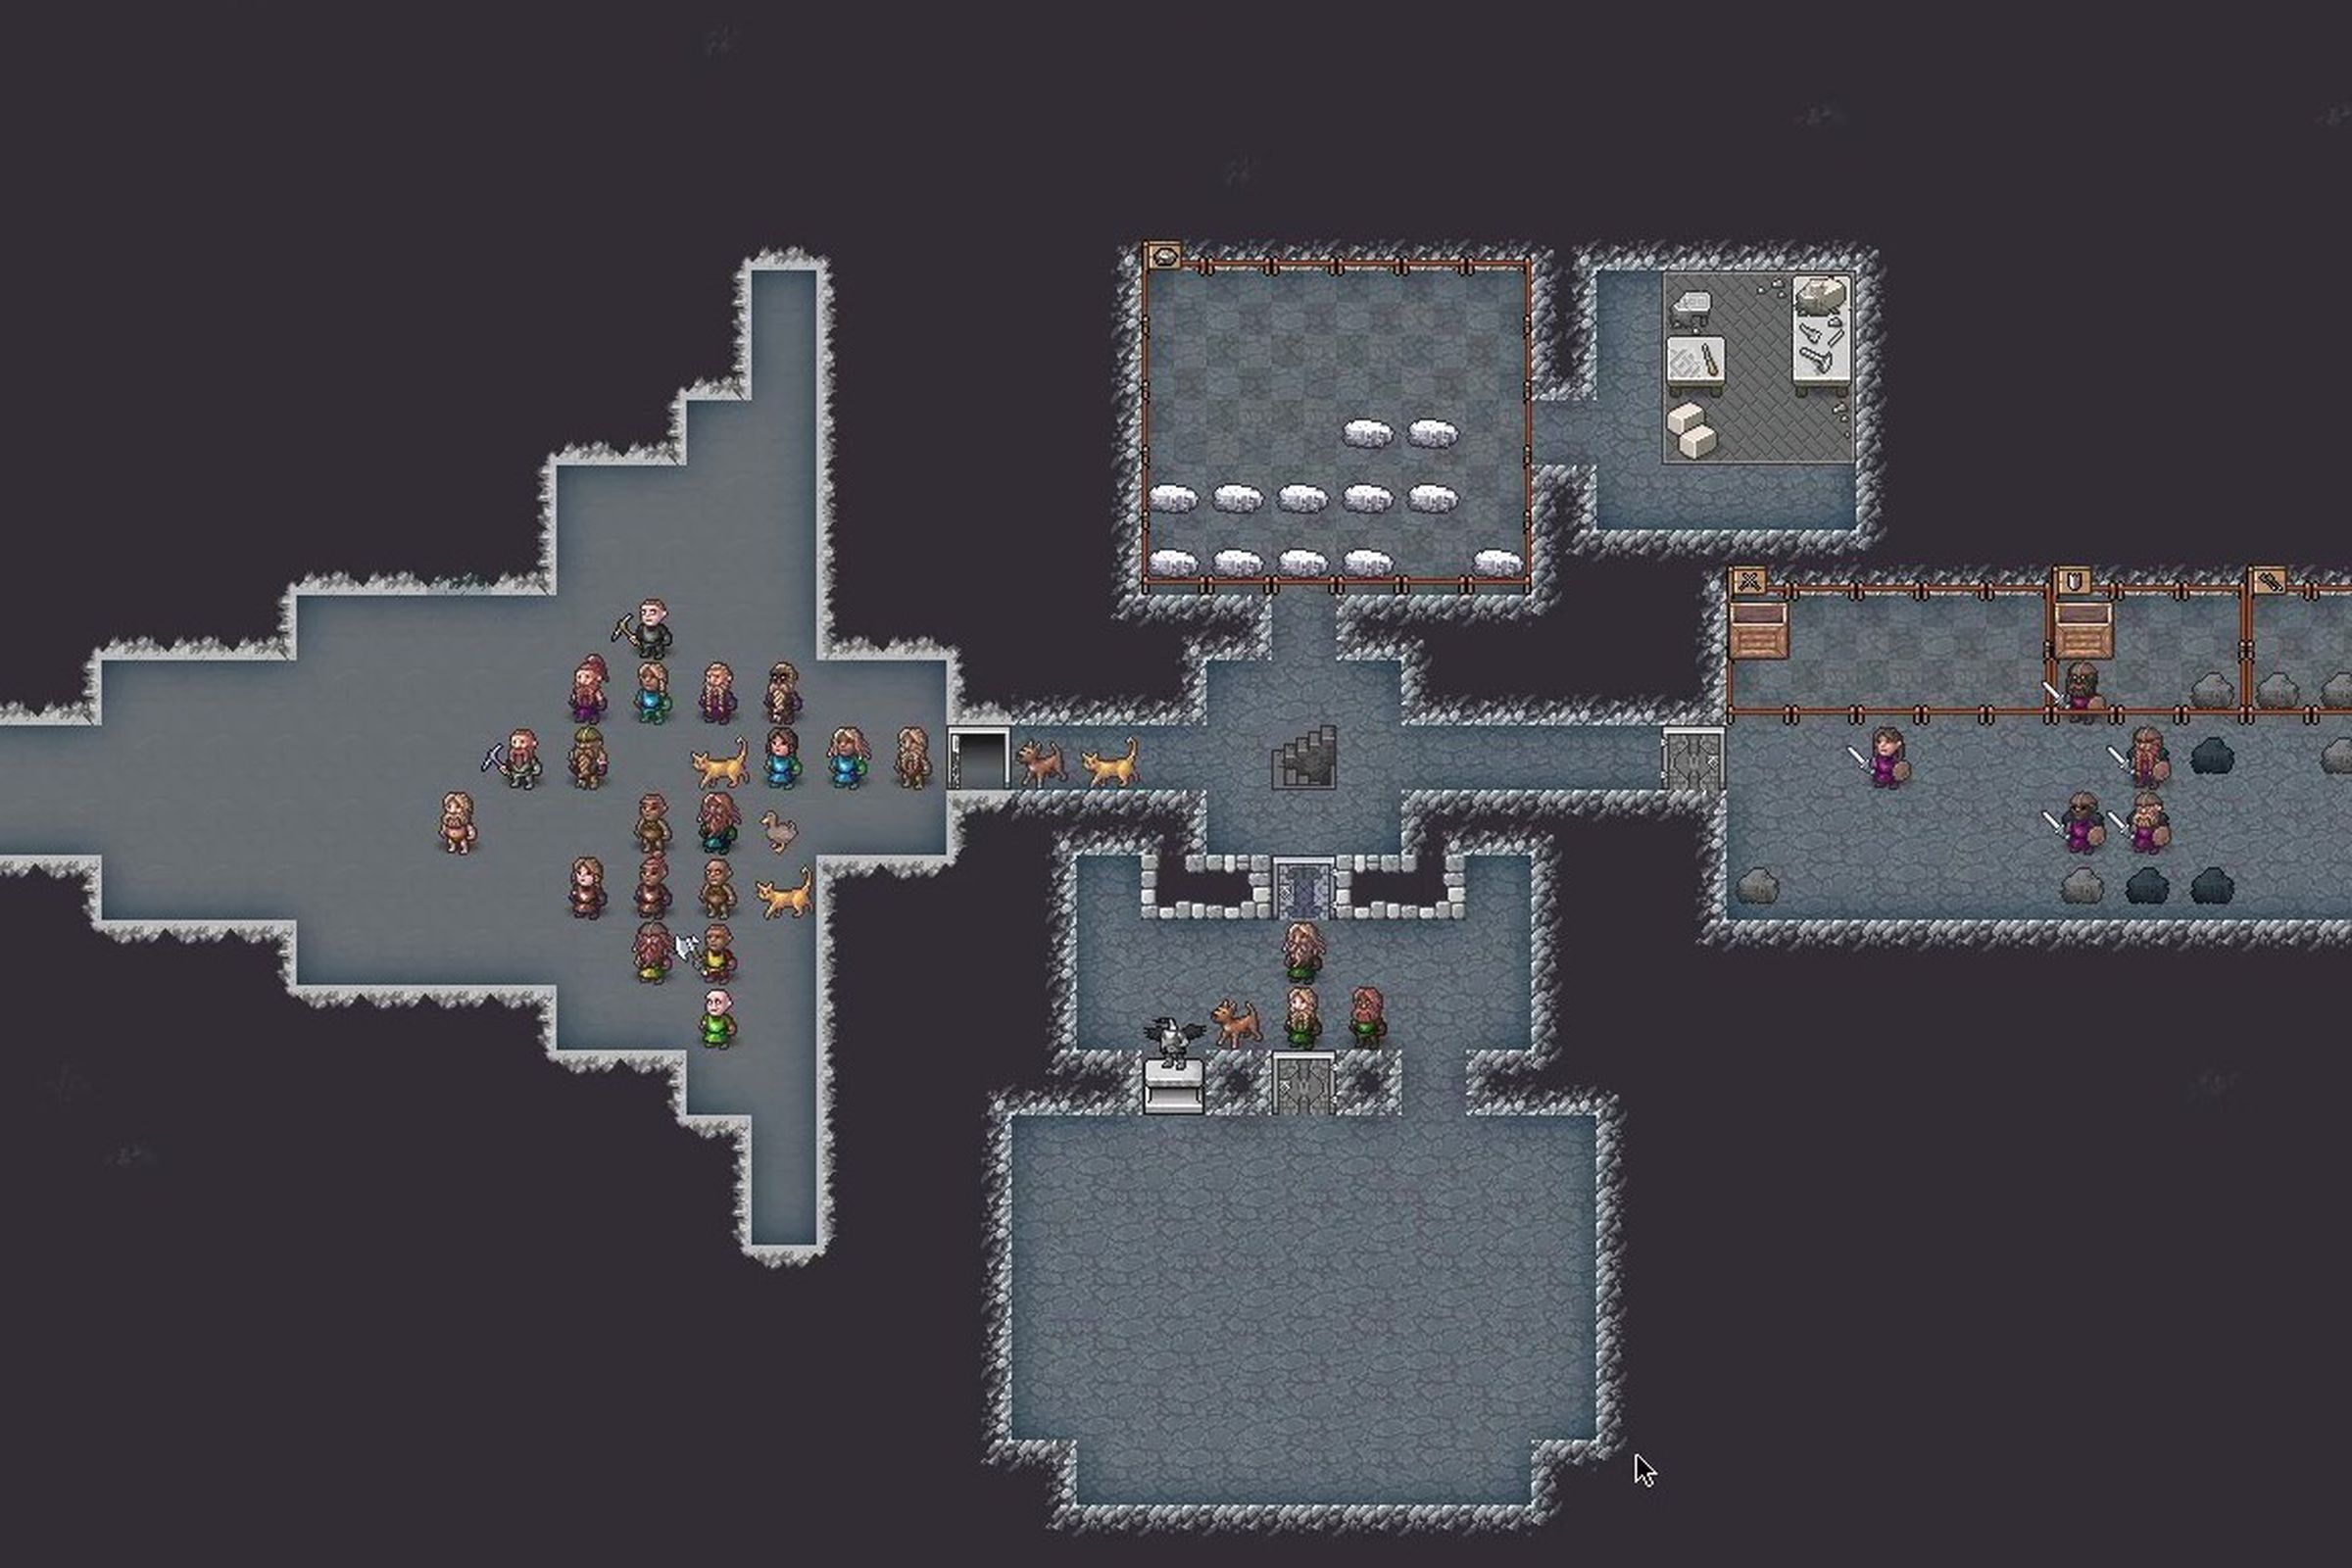 A screenshot from Dwarf Fortress.